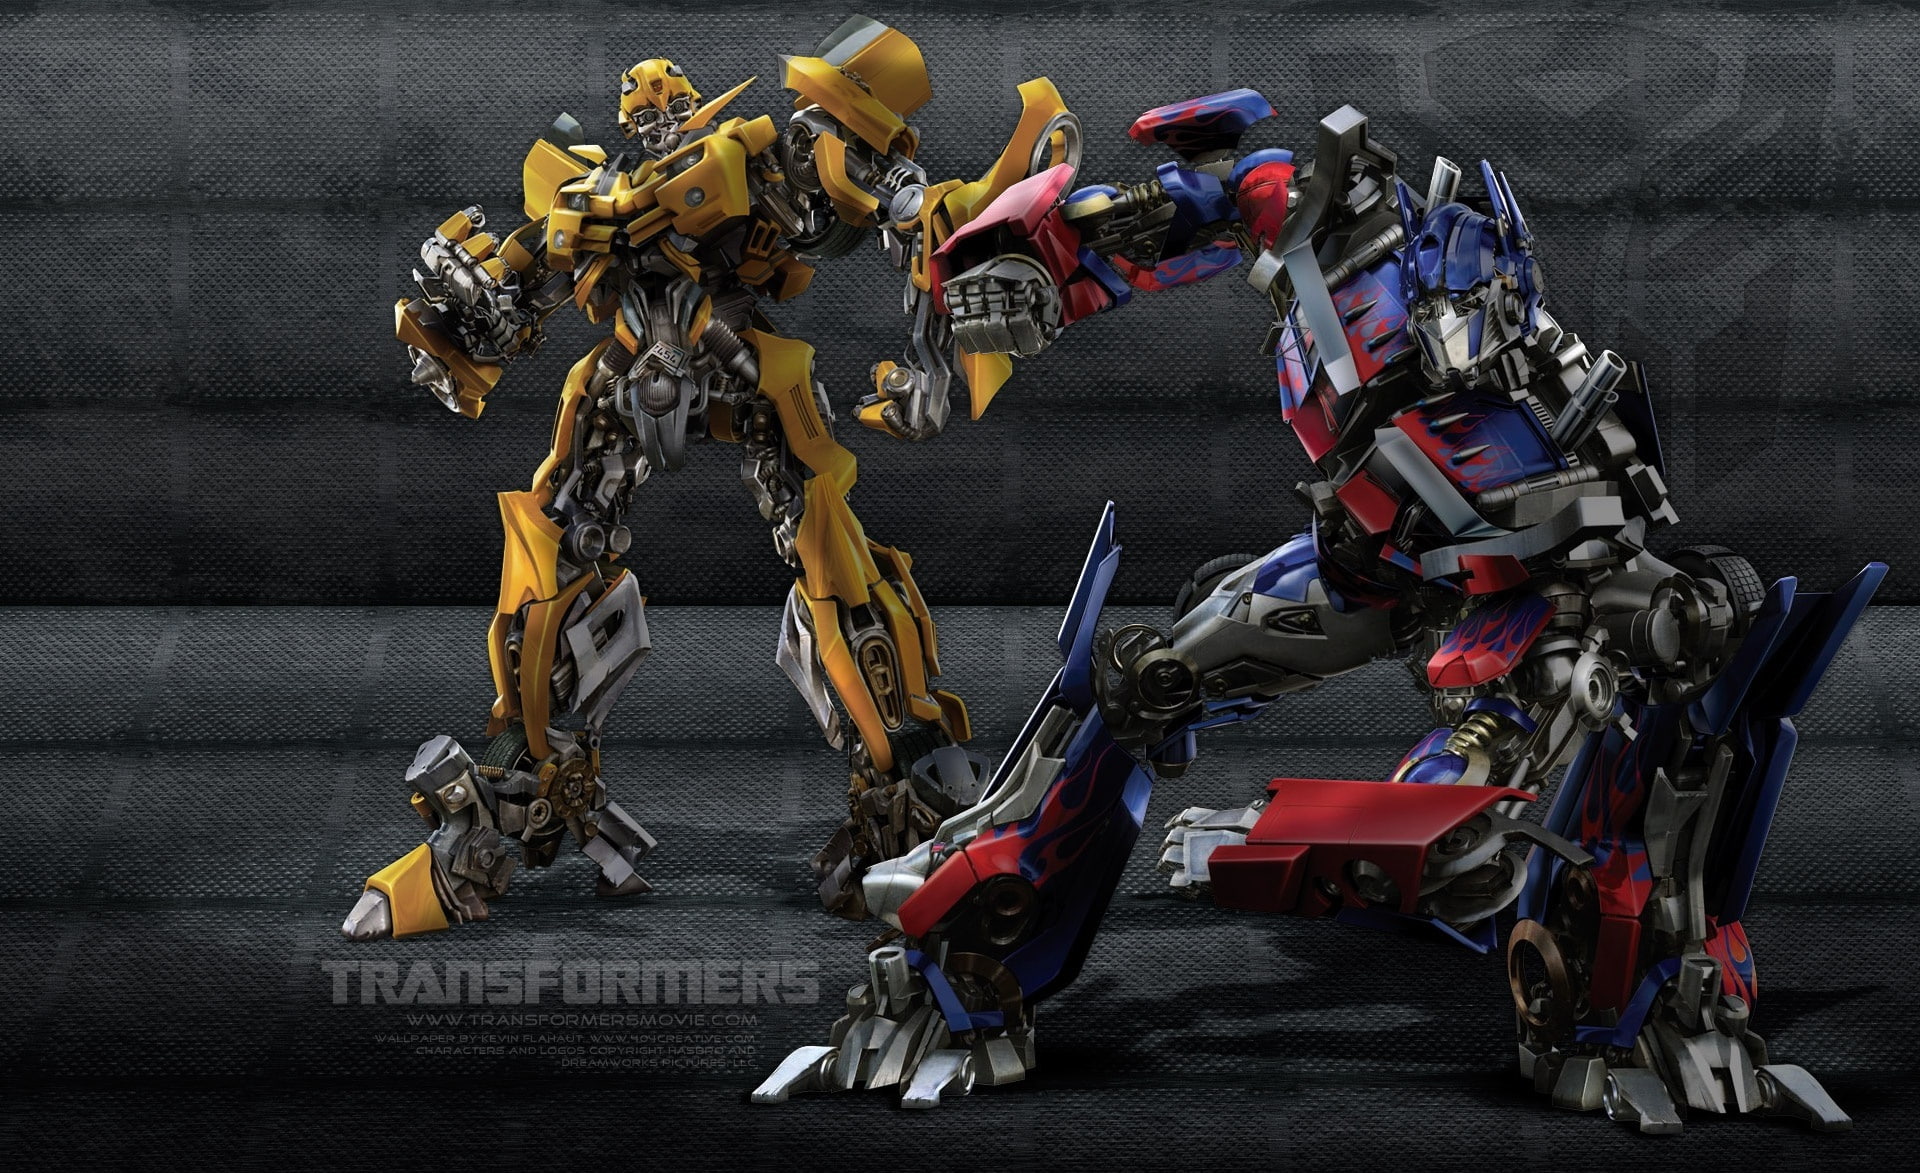 Transformers 1, Transformers Optimus Prime and Bumble Bee digital wallpaper